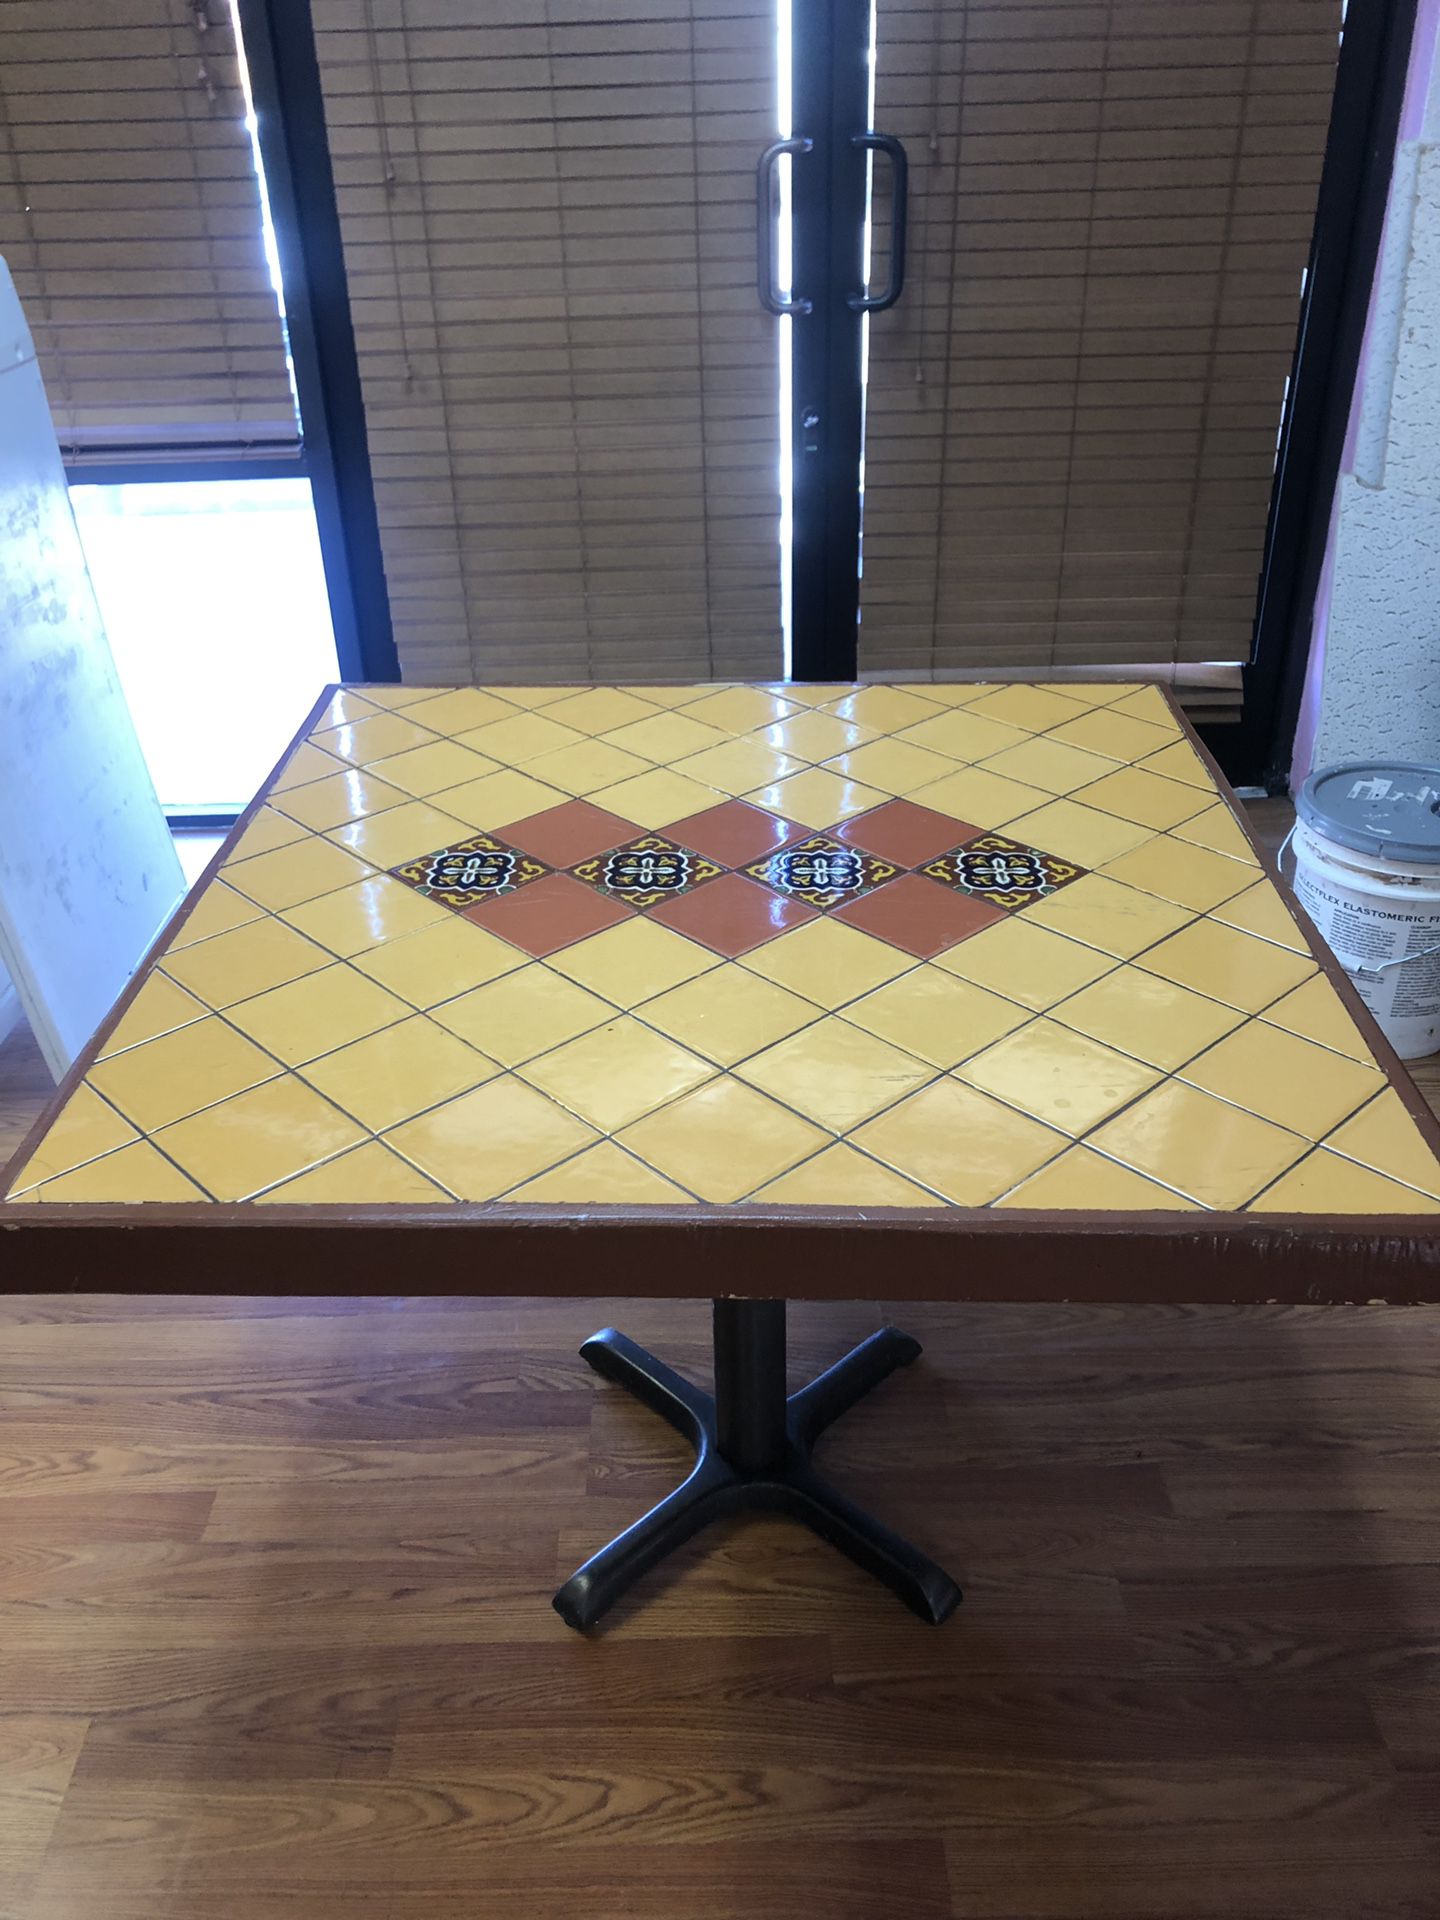 Tile designed table